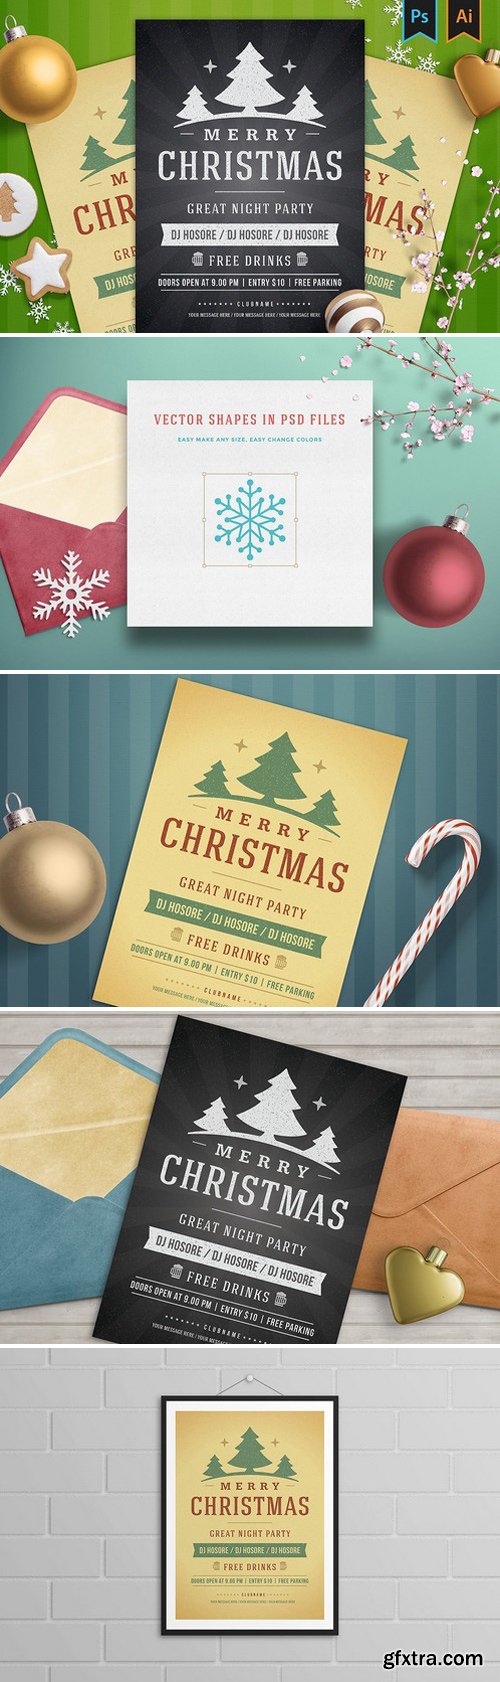 CM - Christmas party invitation flyer 1903708